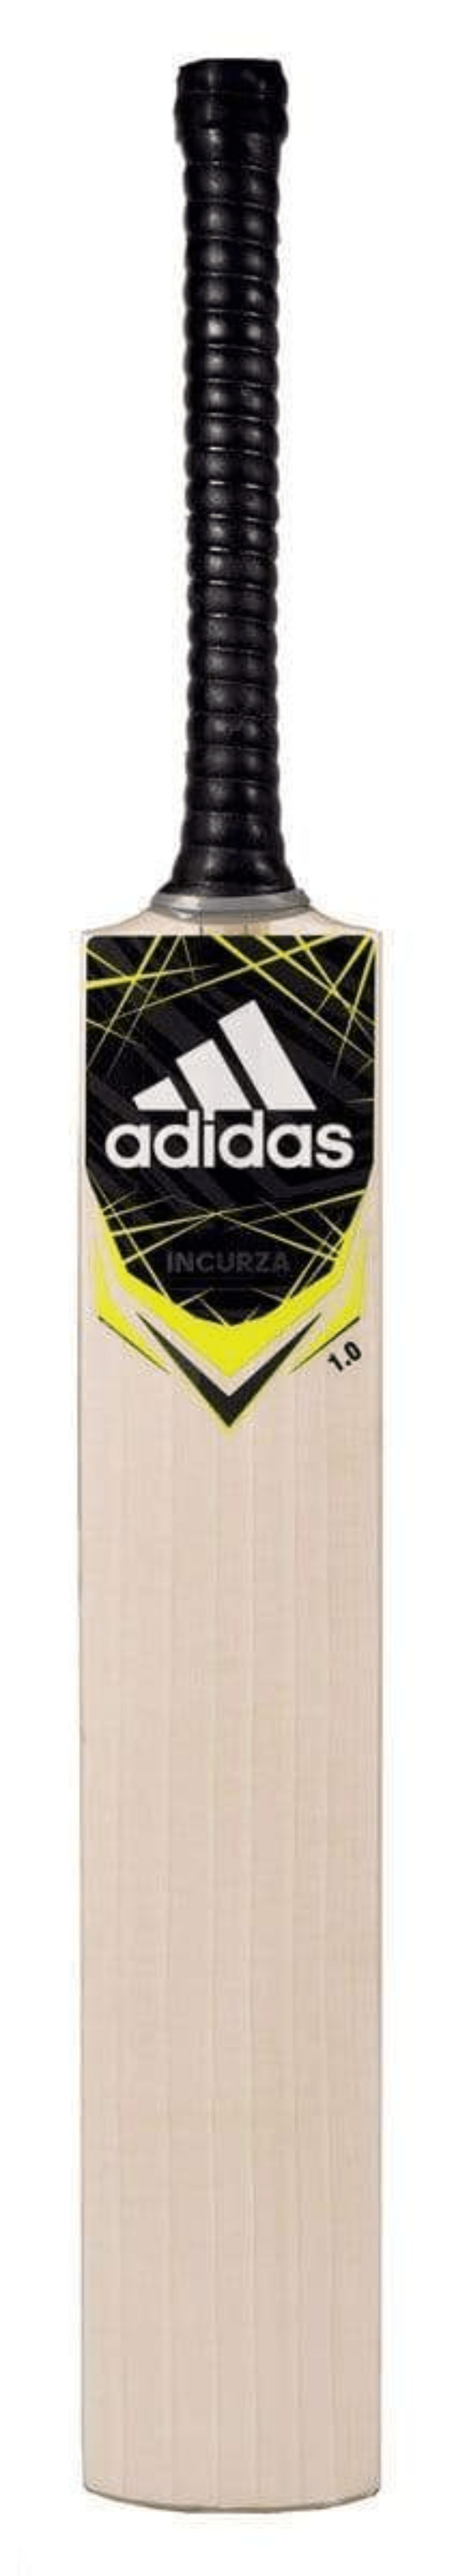 Adidas Cricket Bats SH / 2.7 Adidas Incurza 3.0 Senior Cricket Bat